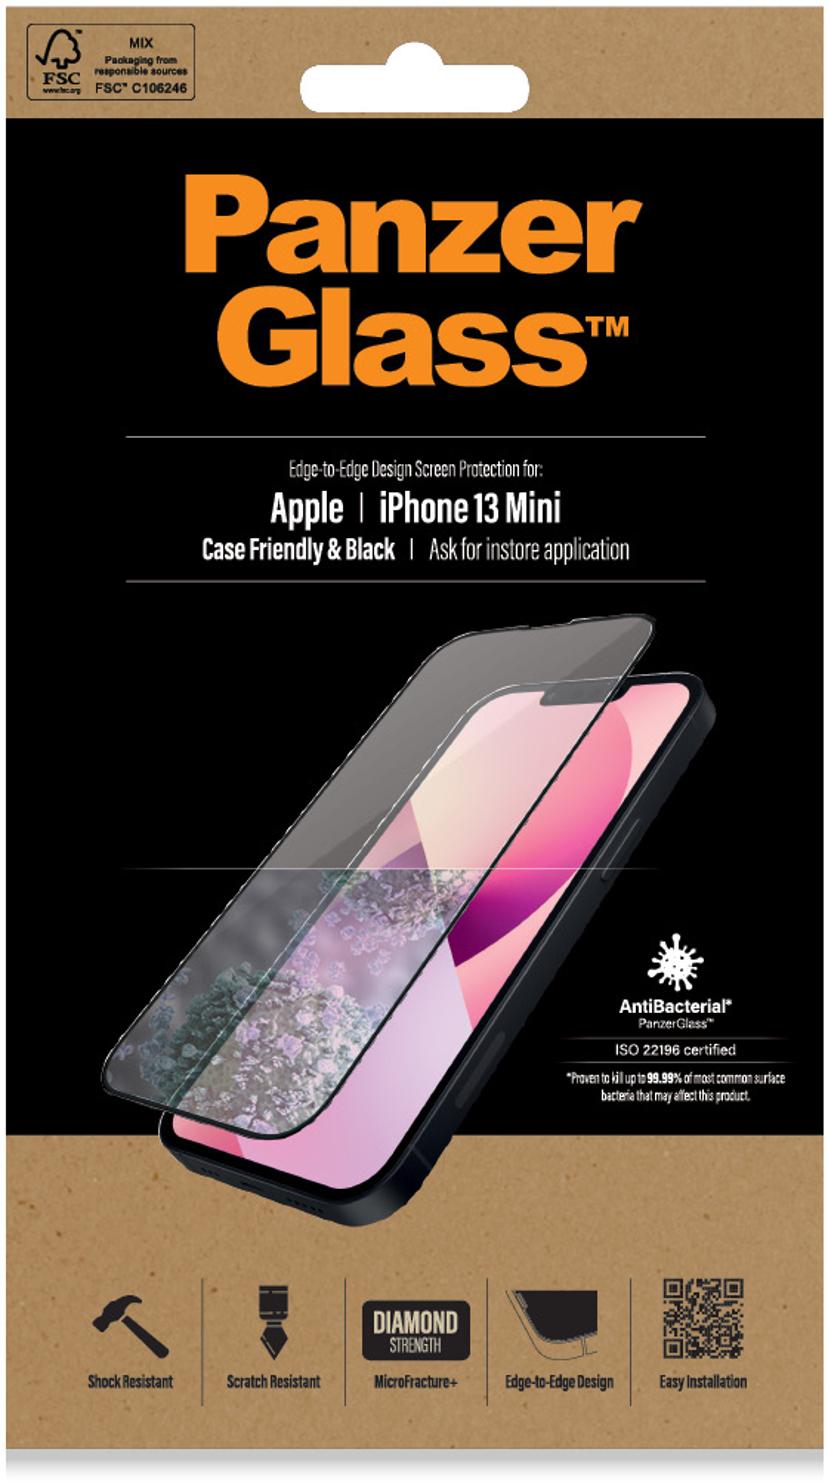 Panzerglass Case Friendly Apple - iPhone 13 Mini